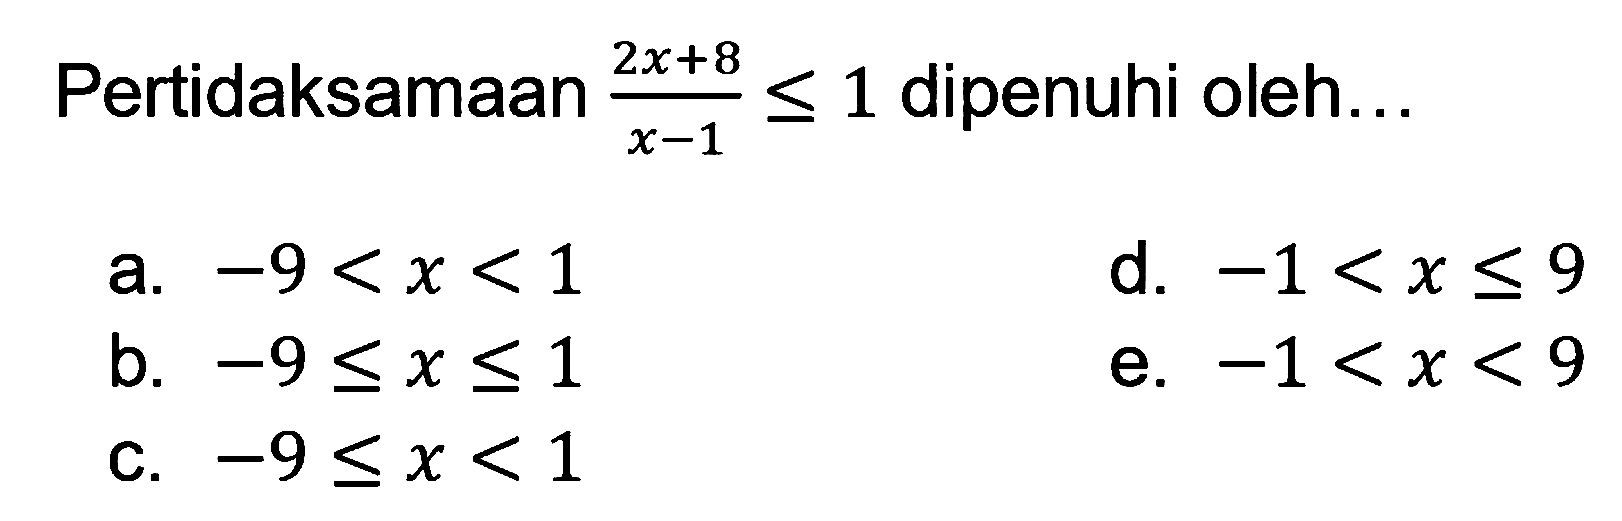 Pertidaksamaan (2x+8)/(x-1)<=1 dipenuhi oleh...